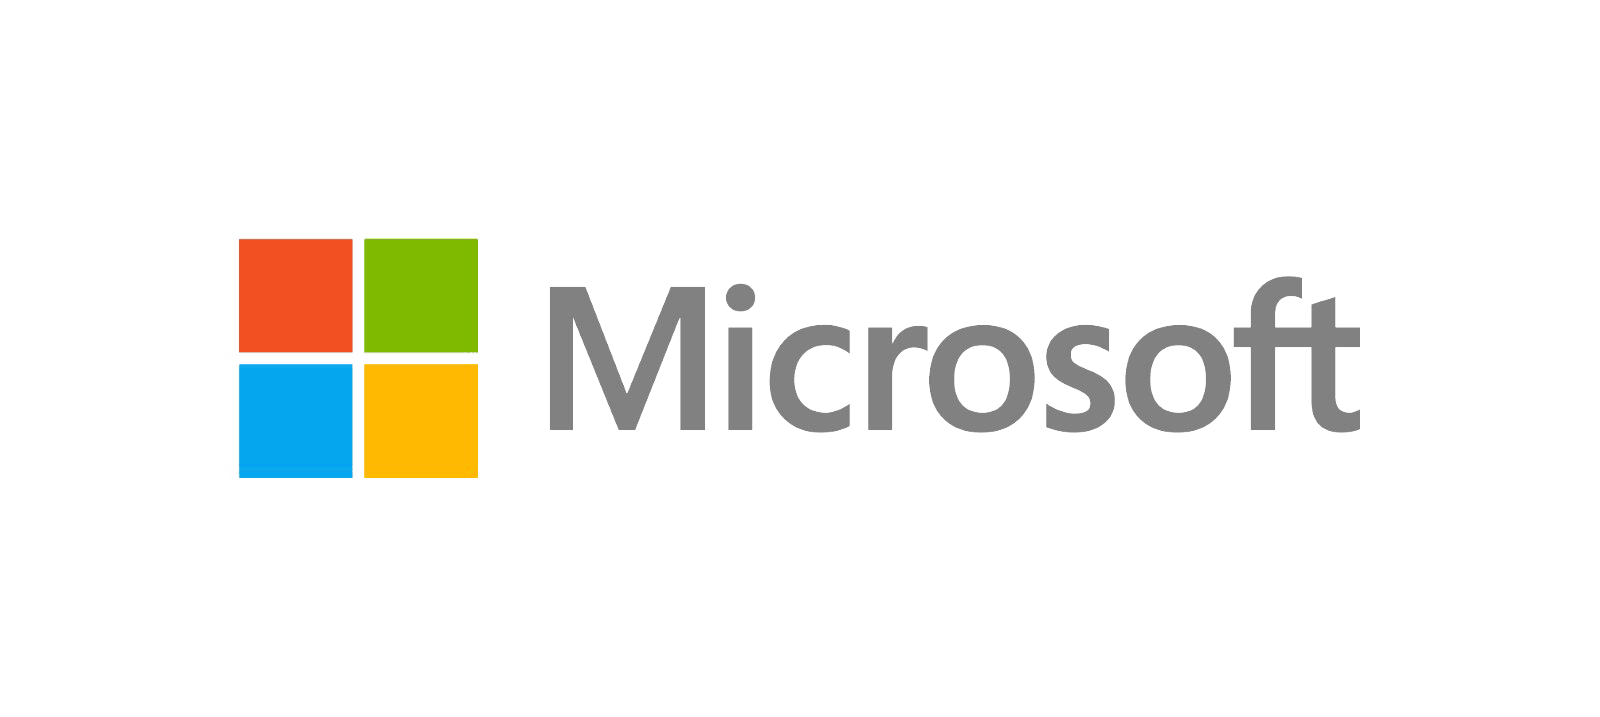 Microsoft : Brand Short Description Type Here.